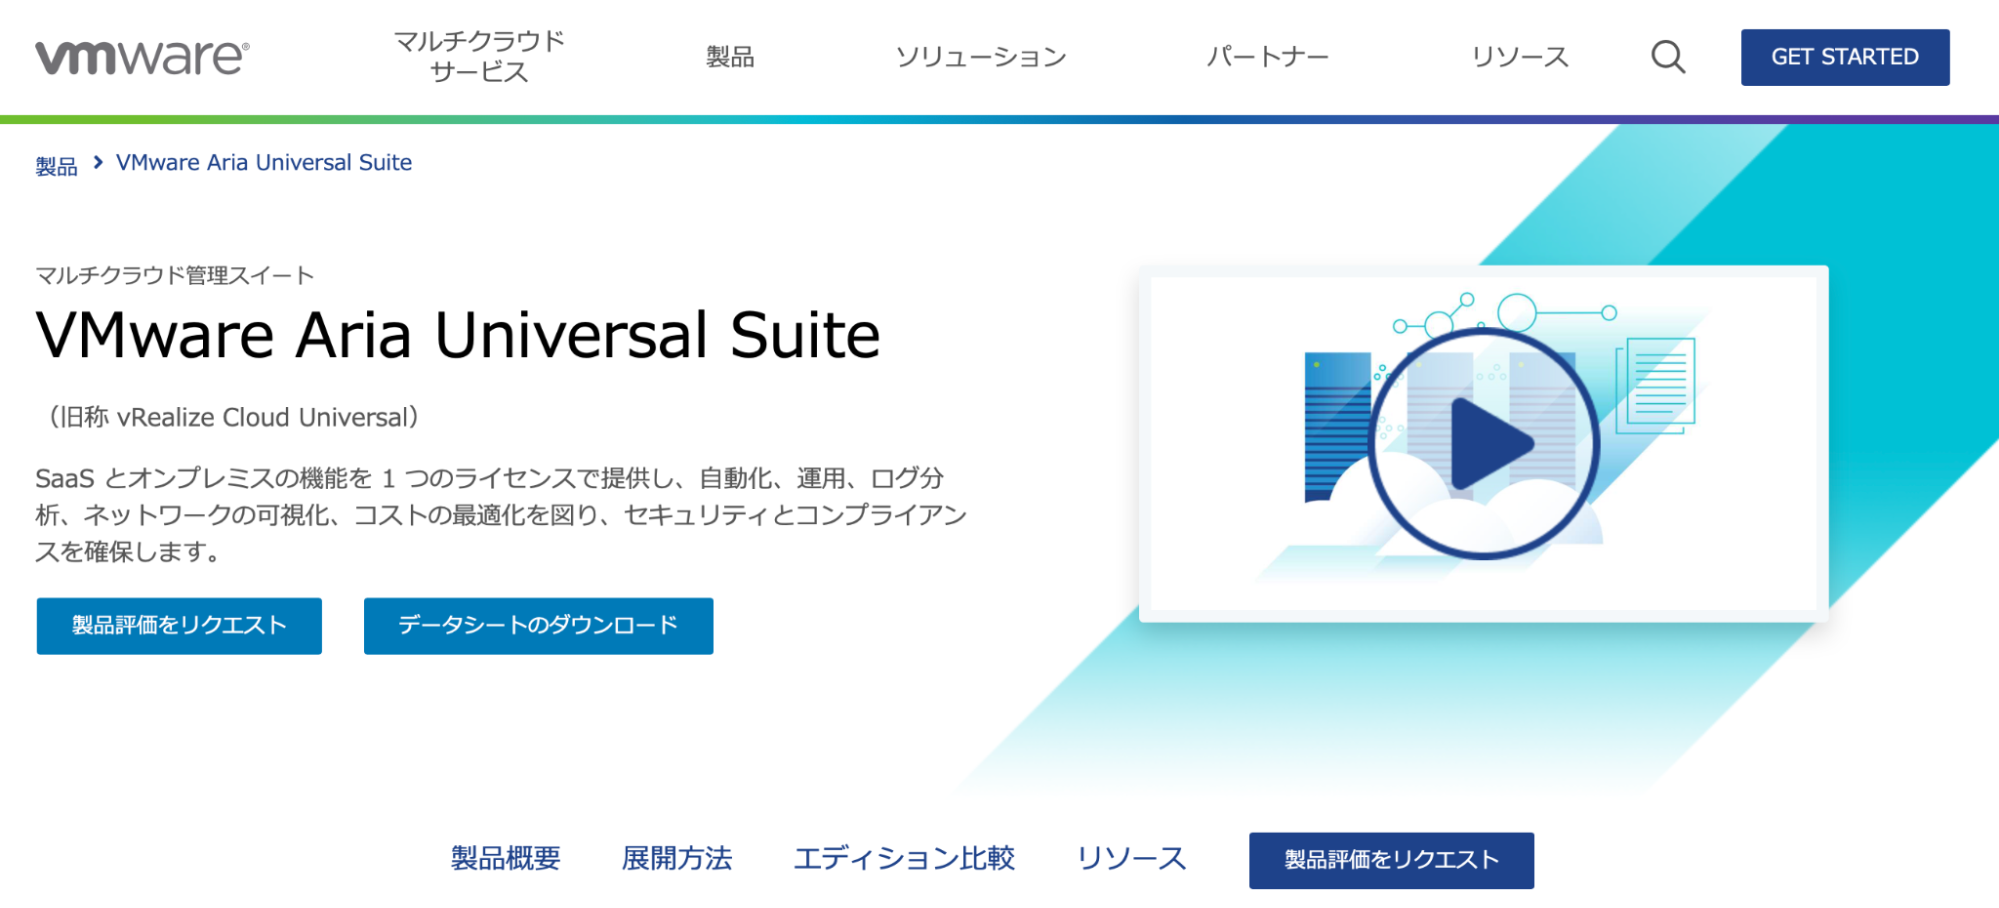 VMware Aria Universal Suite